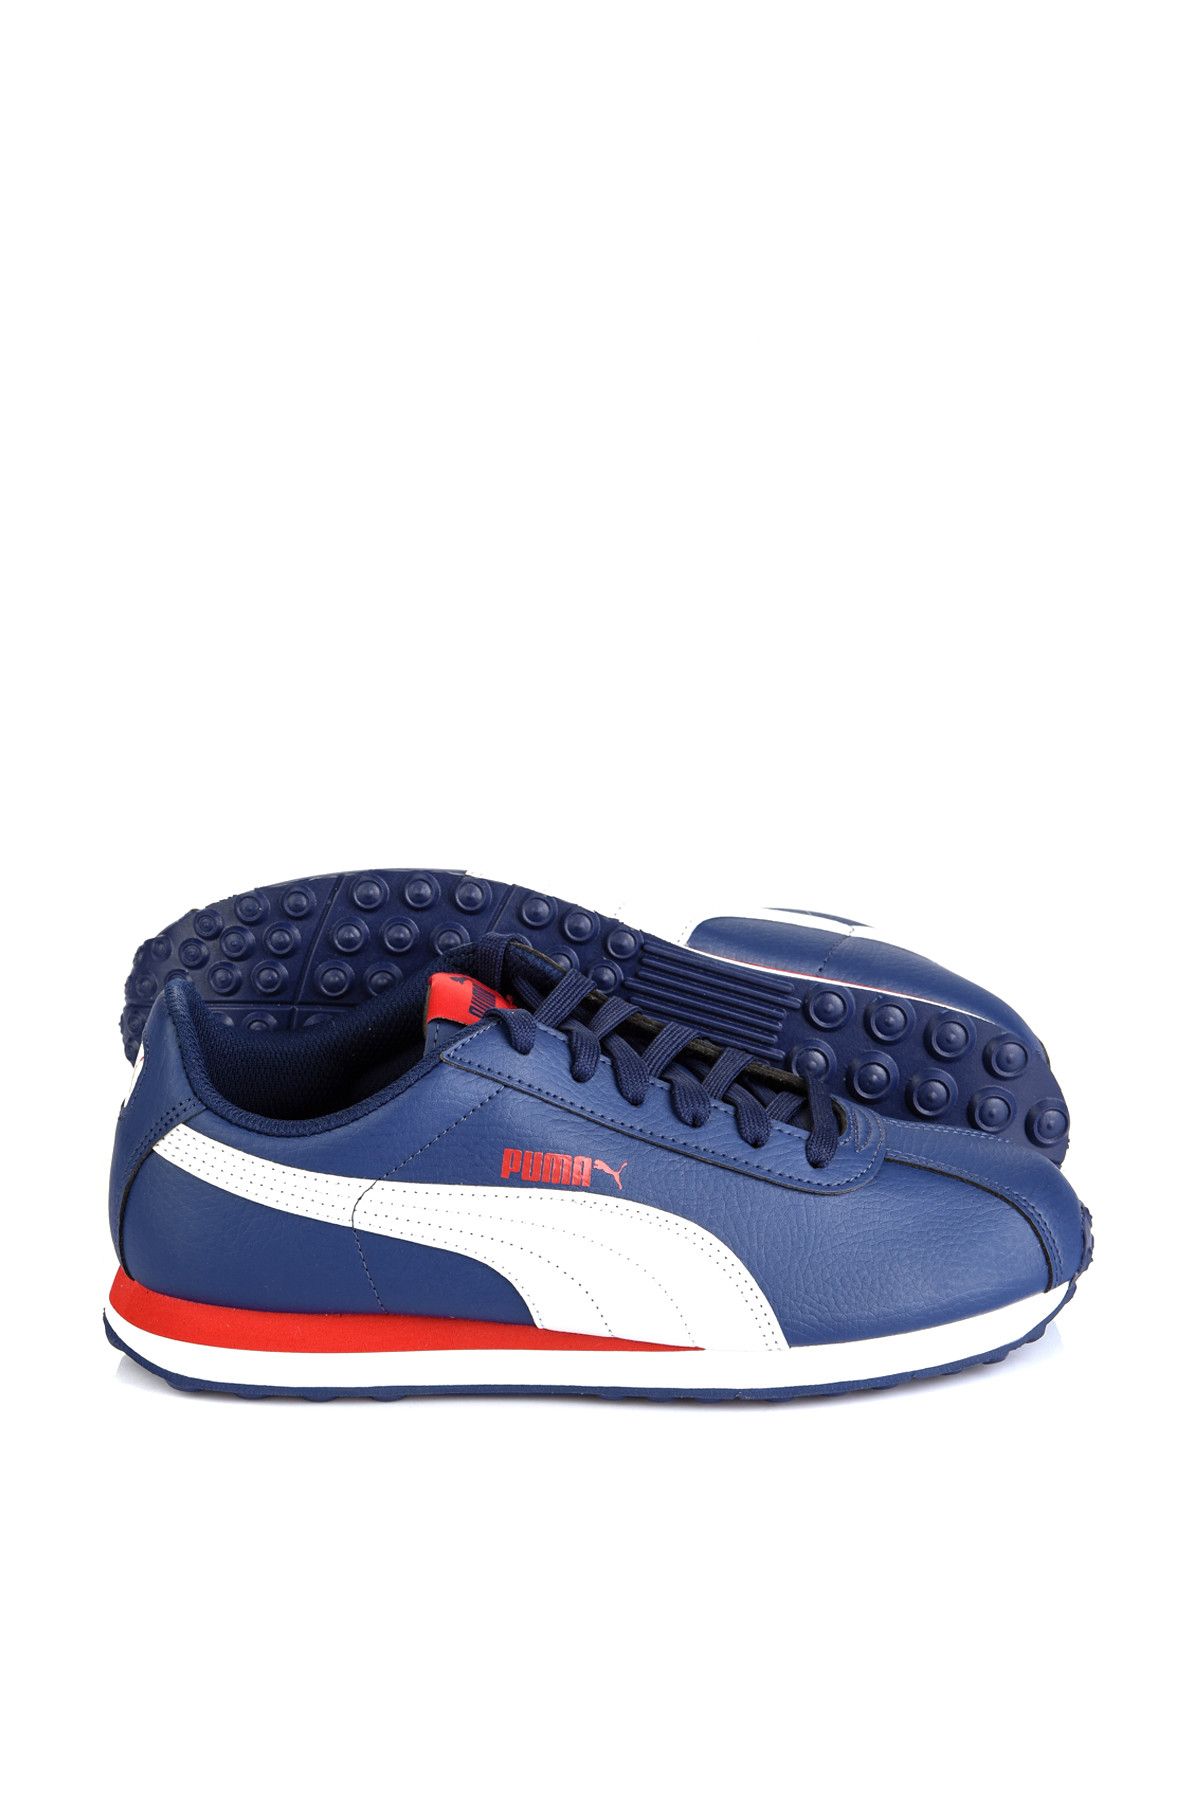 Puma Kadın Spor Ayakkabı - Turin Jr Blue Depths-White - 36091419